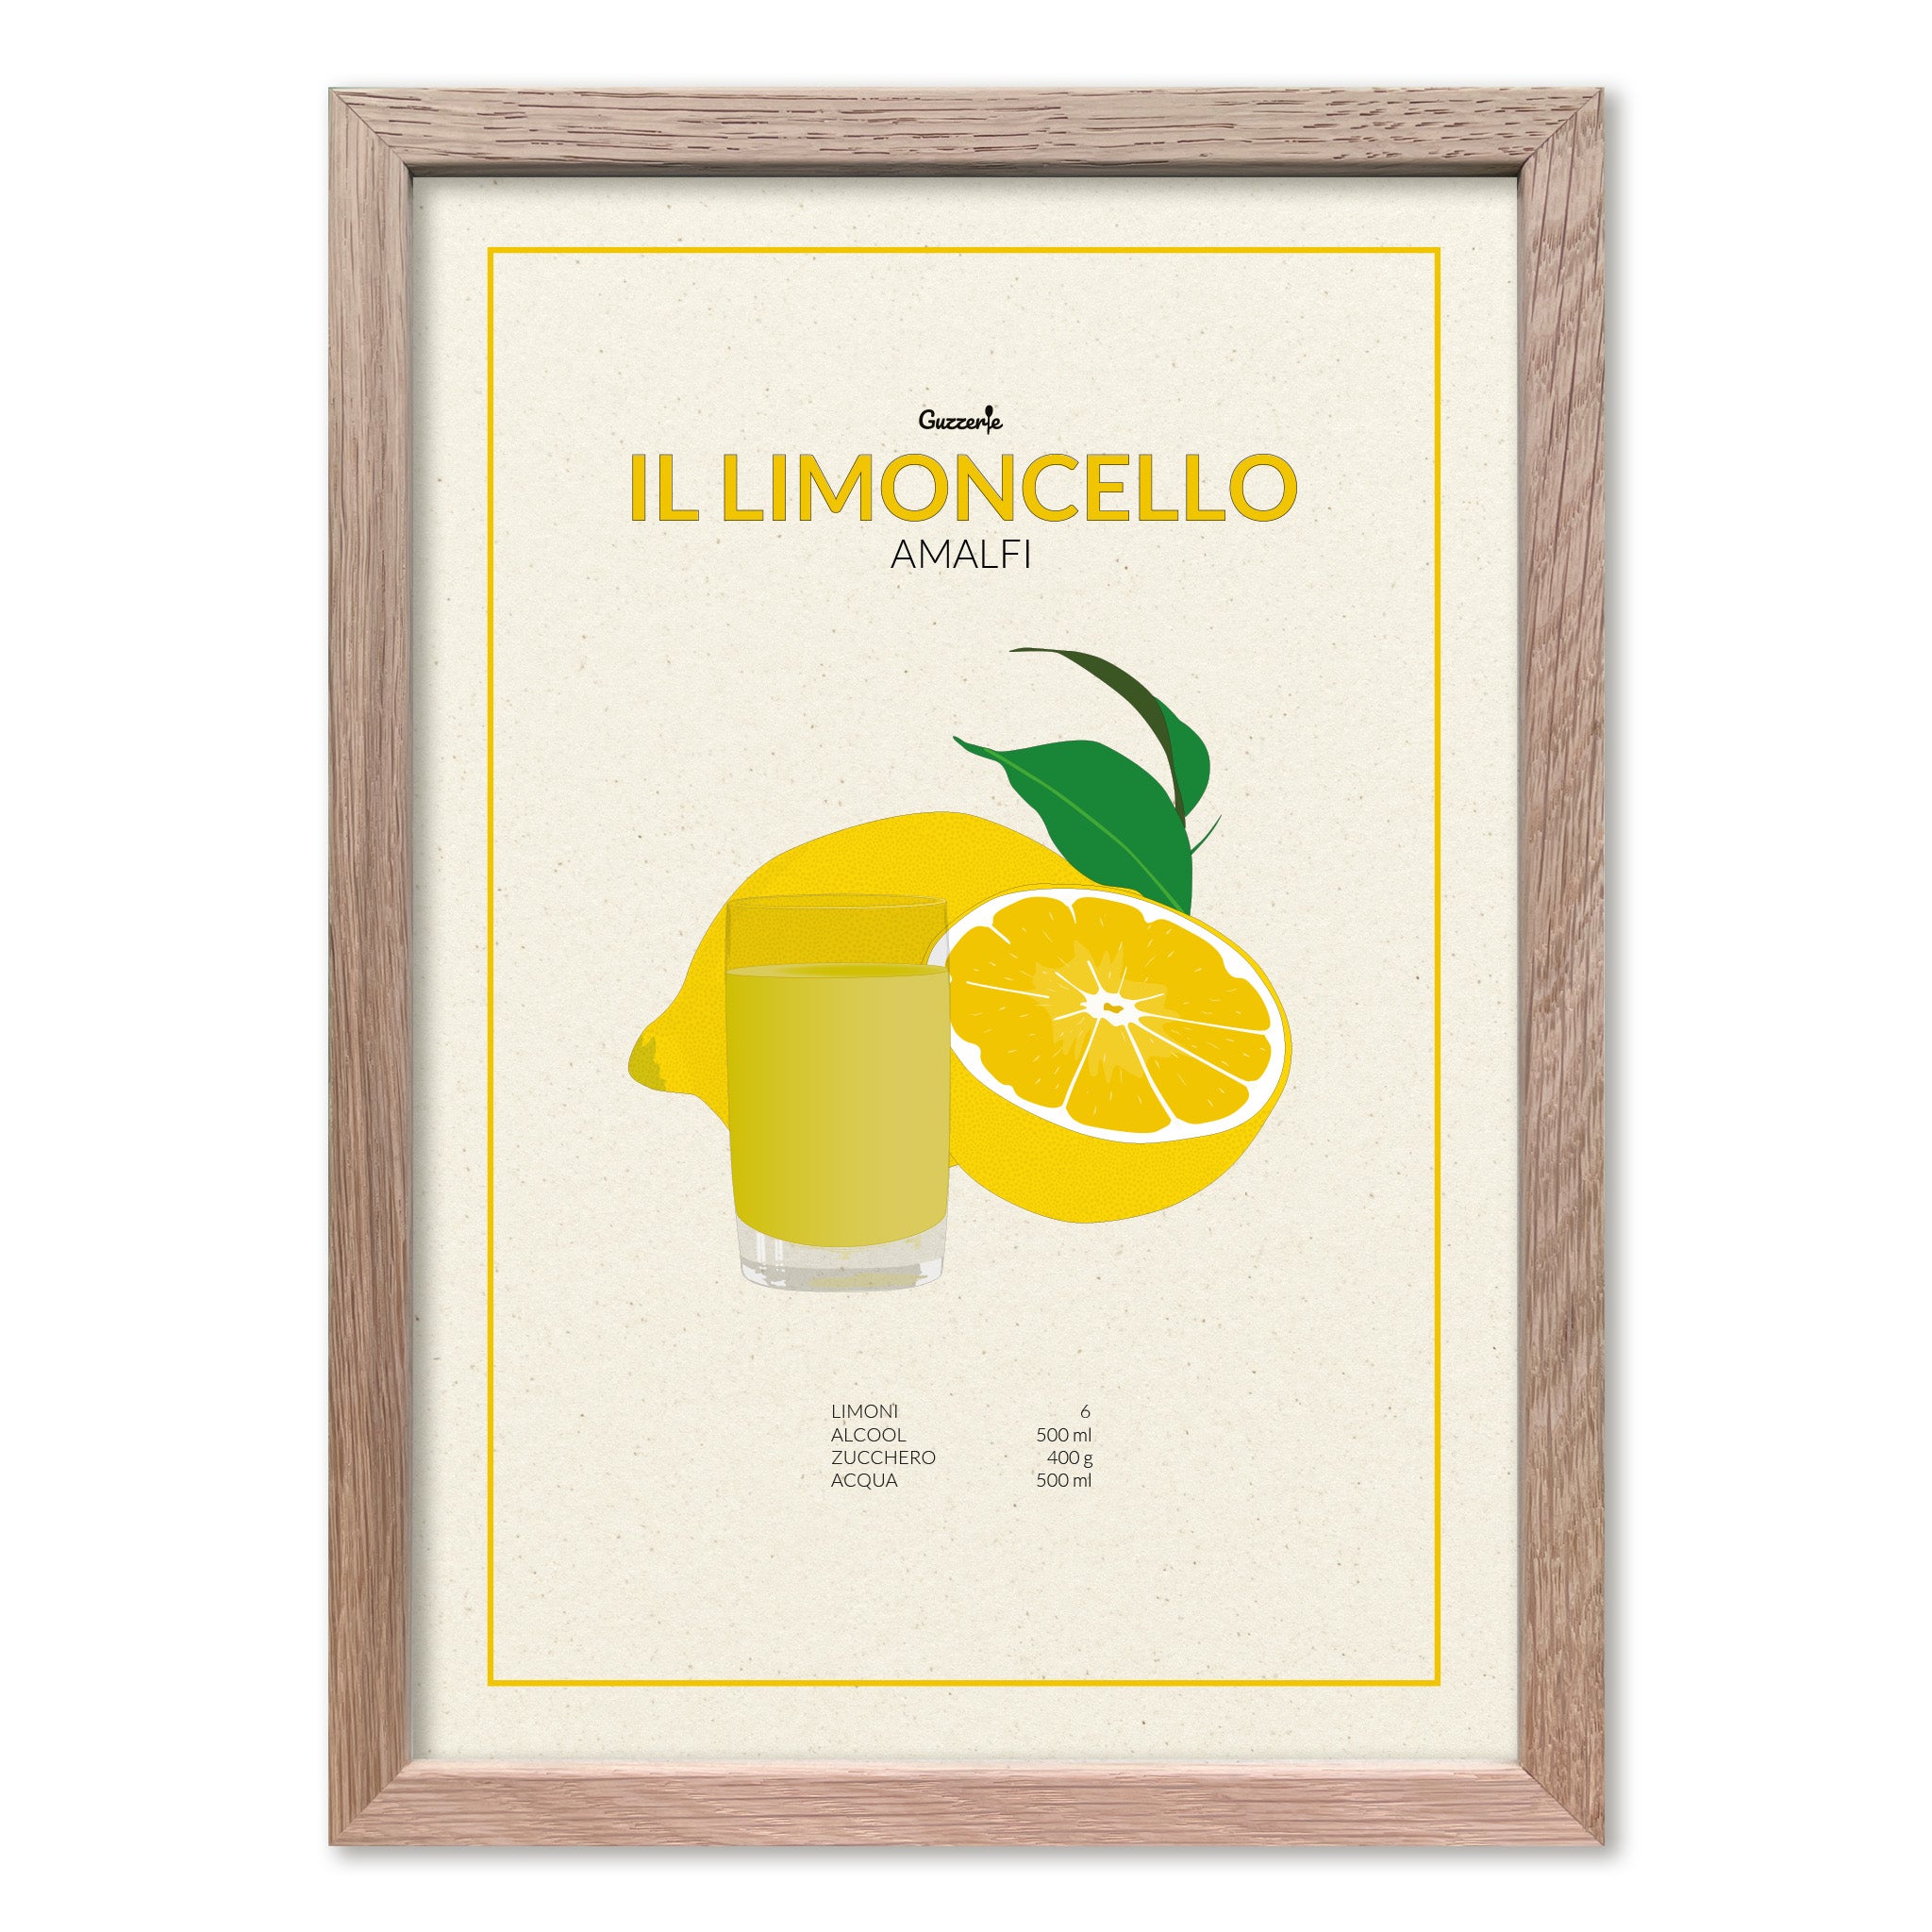 Iconic Poster of Limoncello | Guzzerie